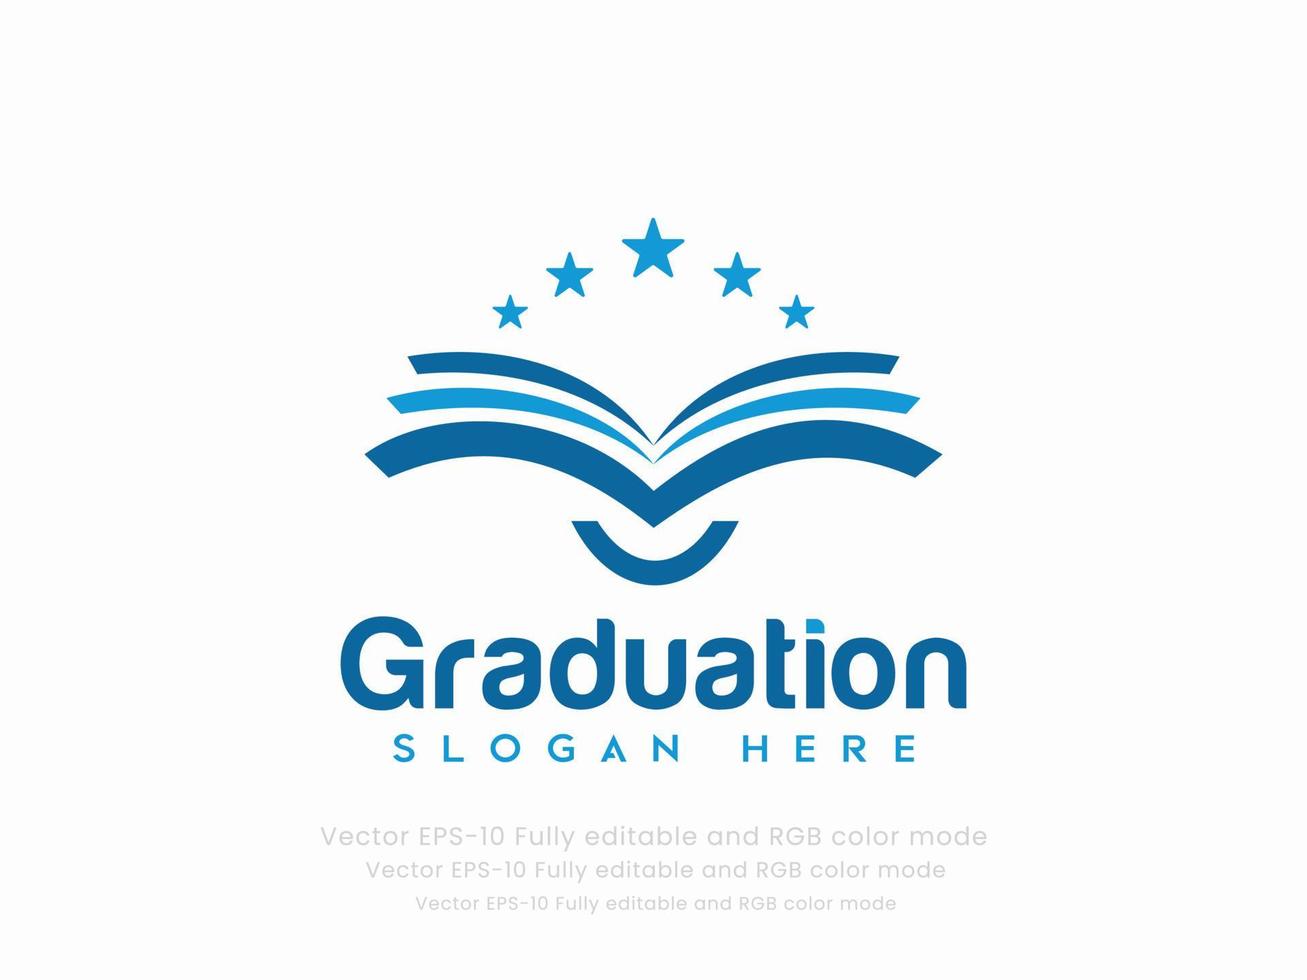 Graduation or education logo vector